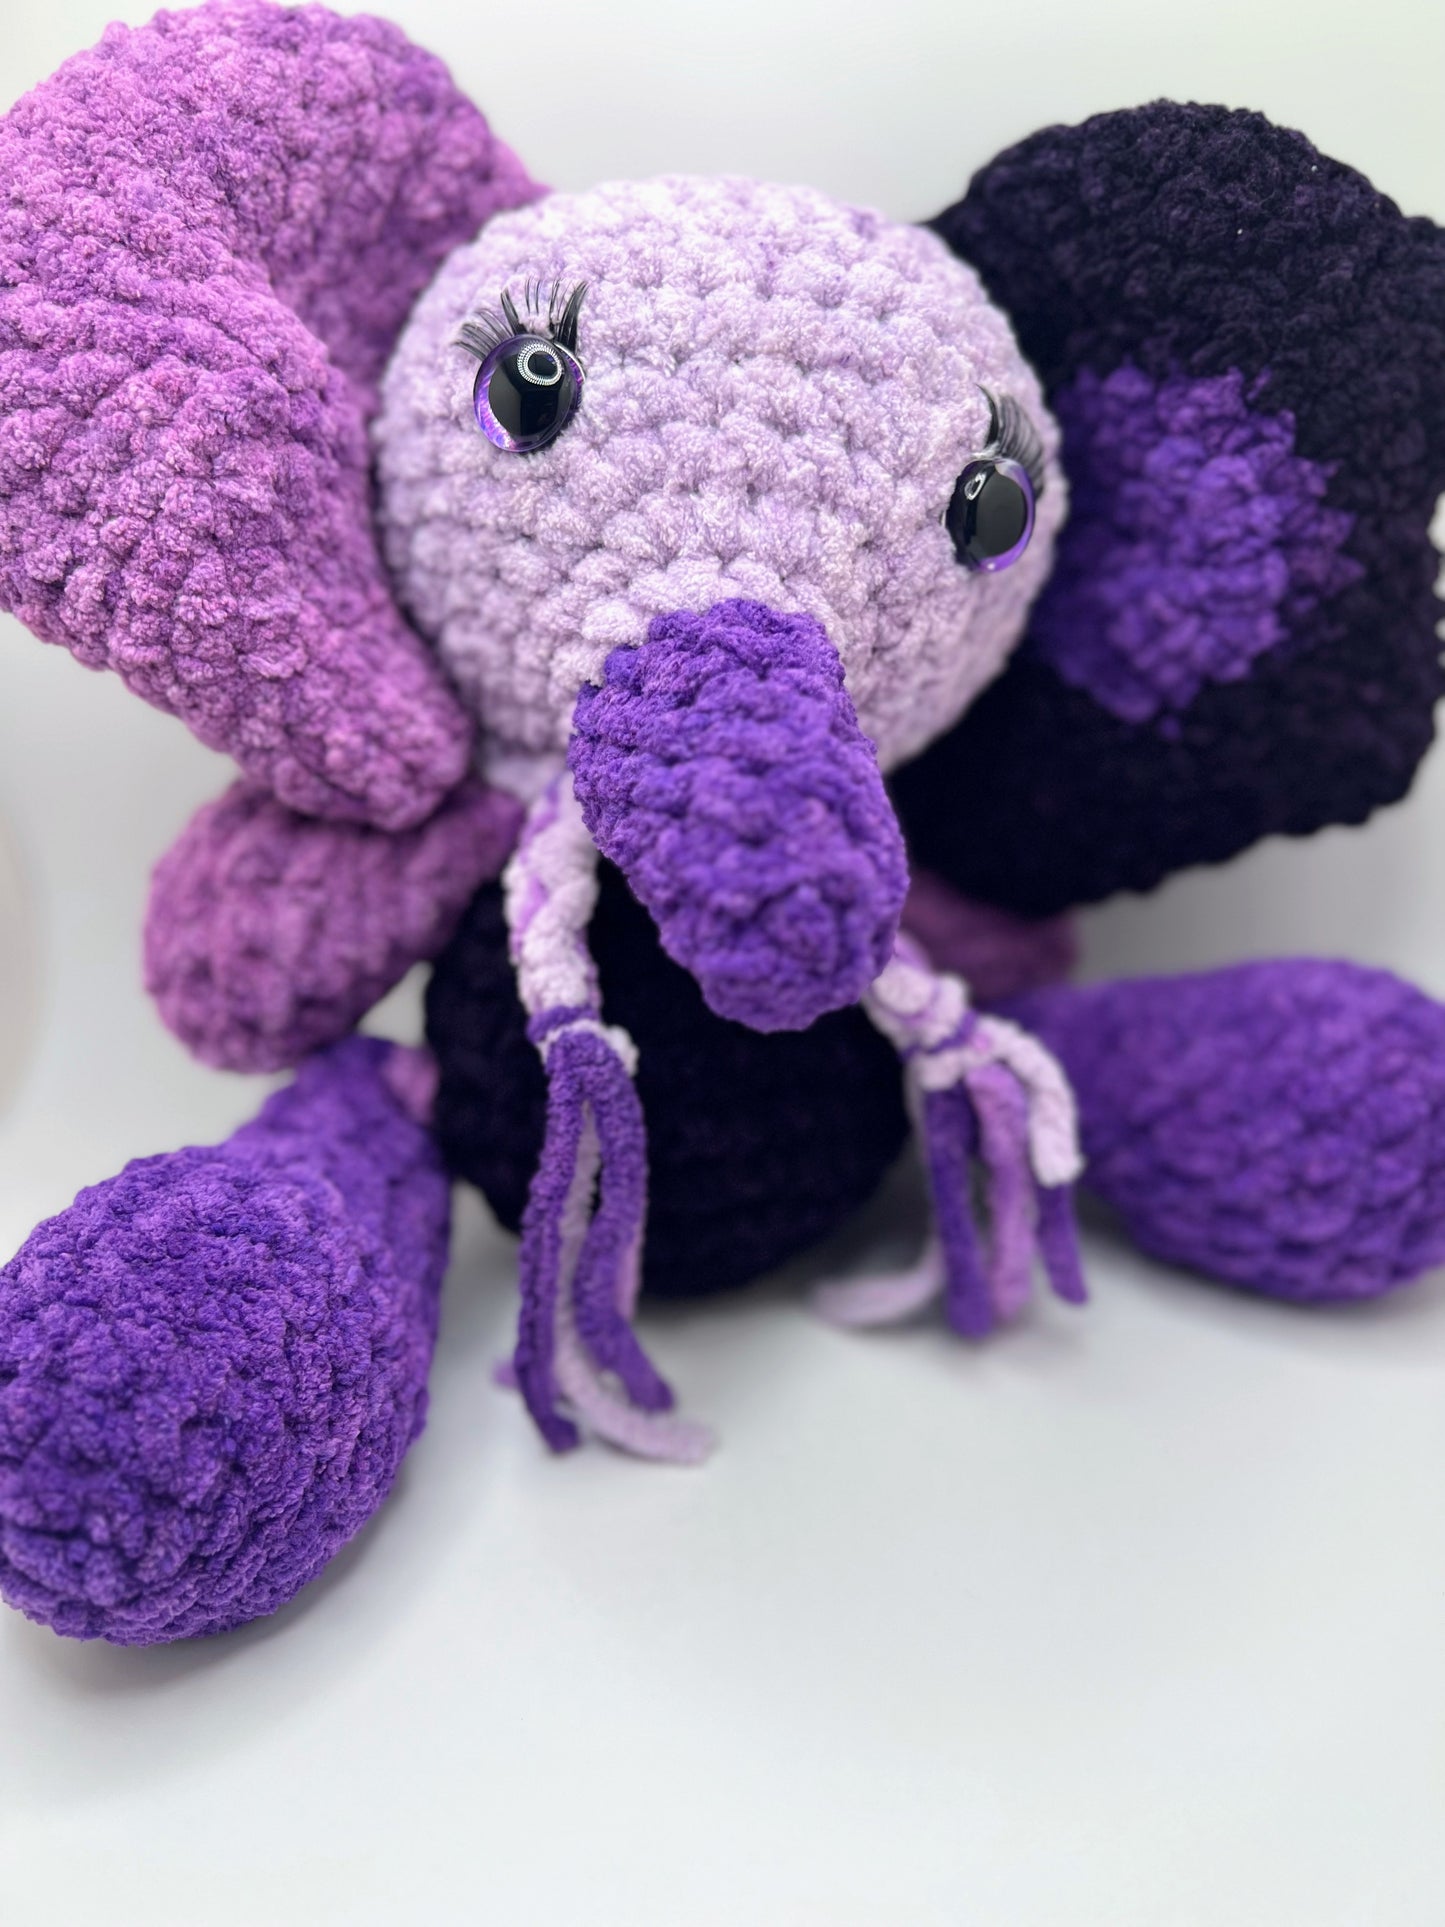 Stuffed Cute Elephant 🐘 Toy - Crochet Knitted Amigurumi Toy